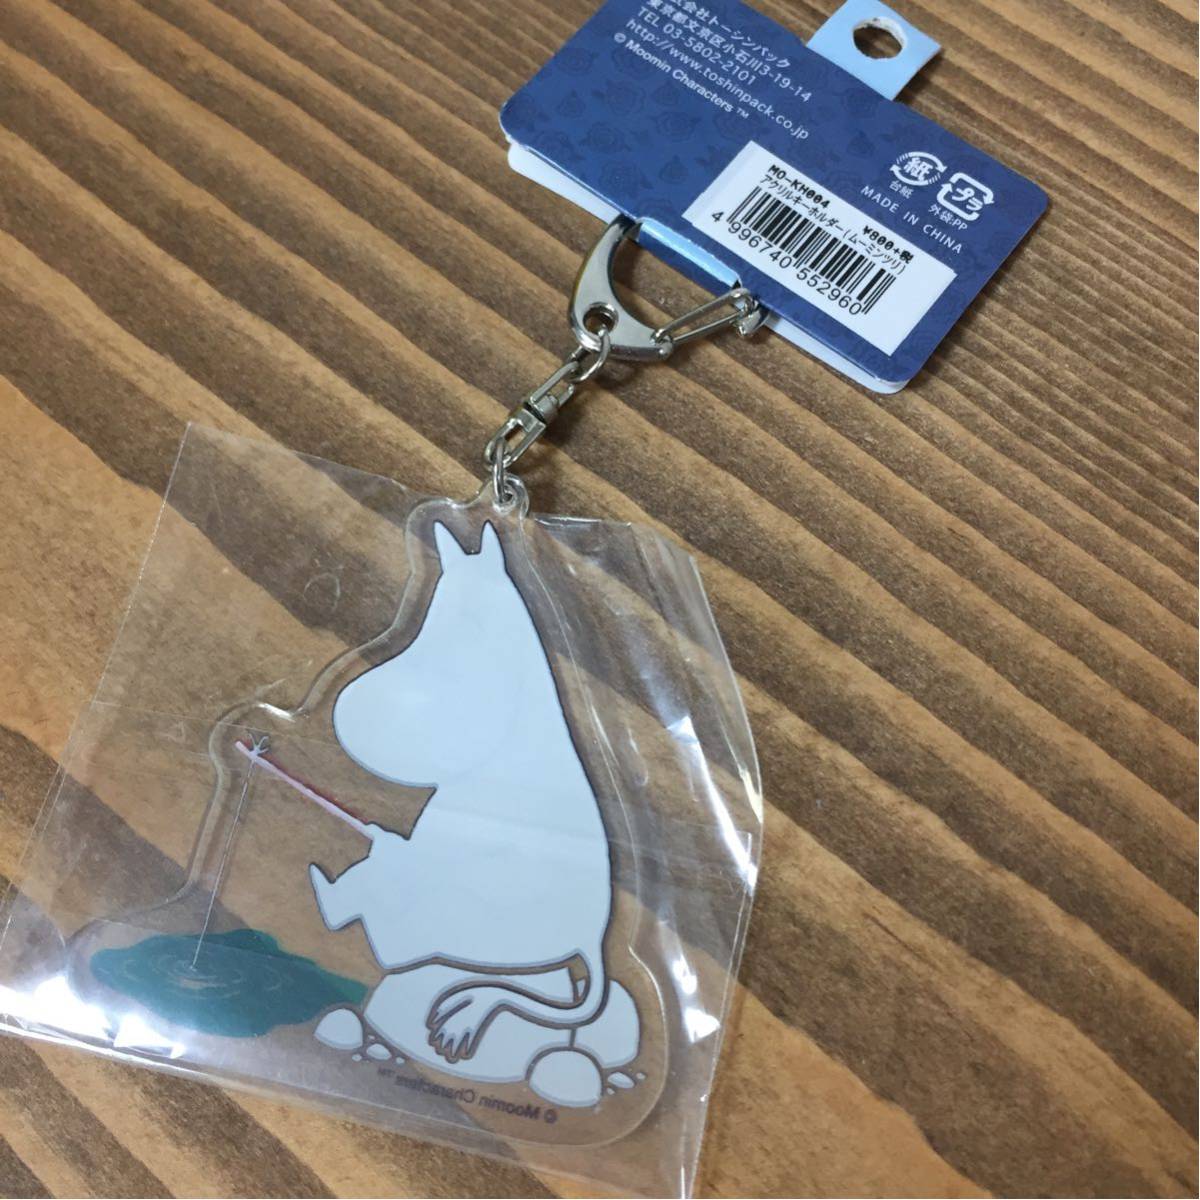  Moomin little mii брелок для ключа стоимость доставки 120 новый товар акрил брелок для ключа tsuli